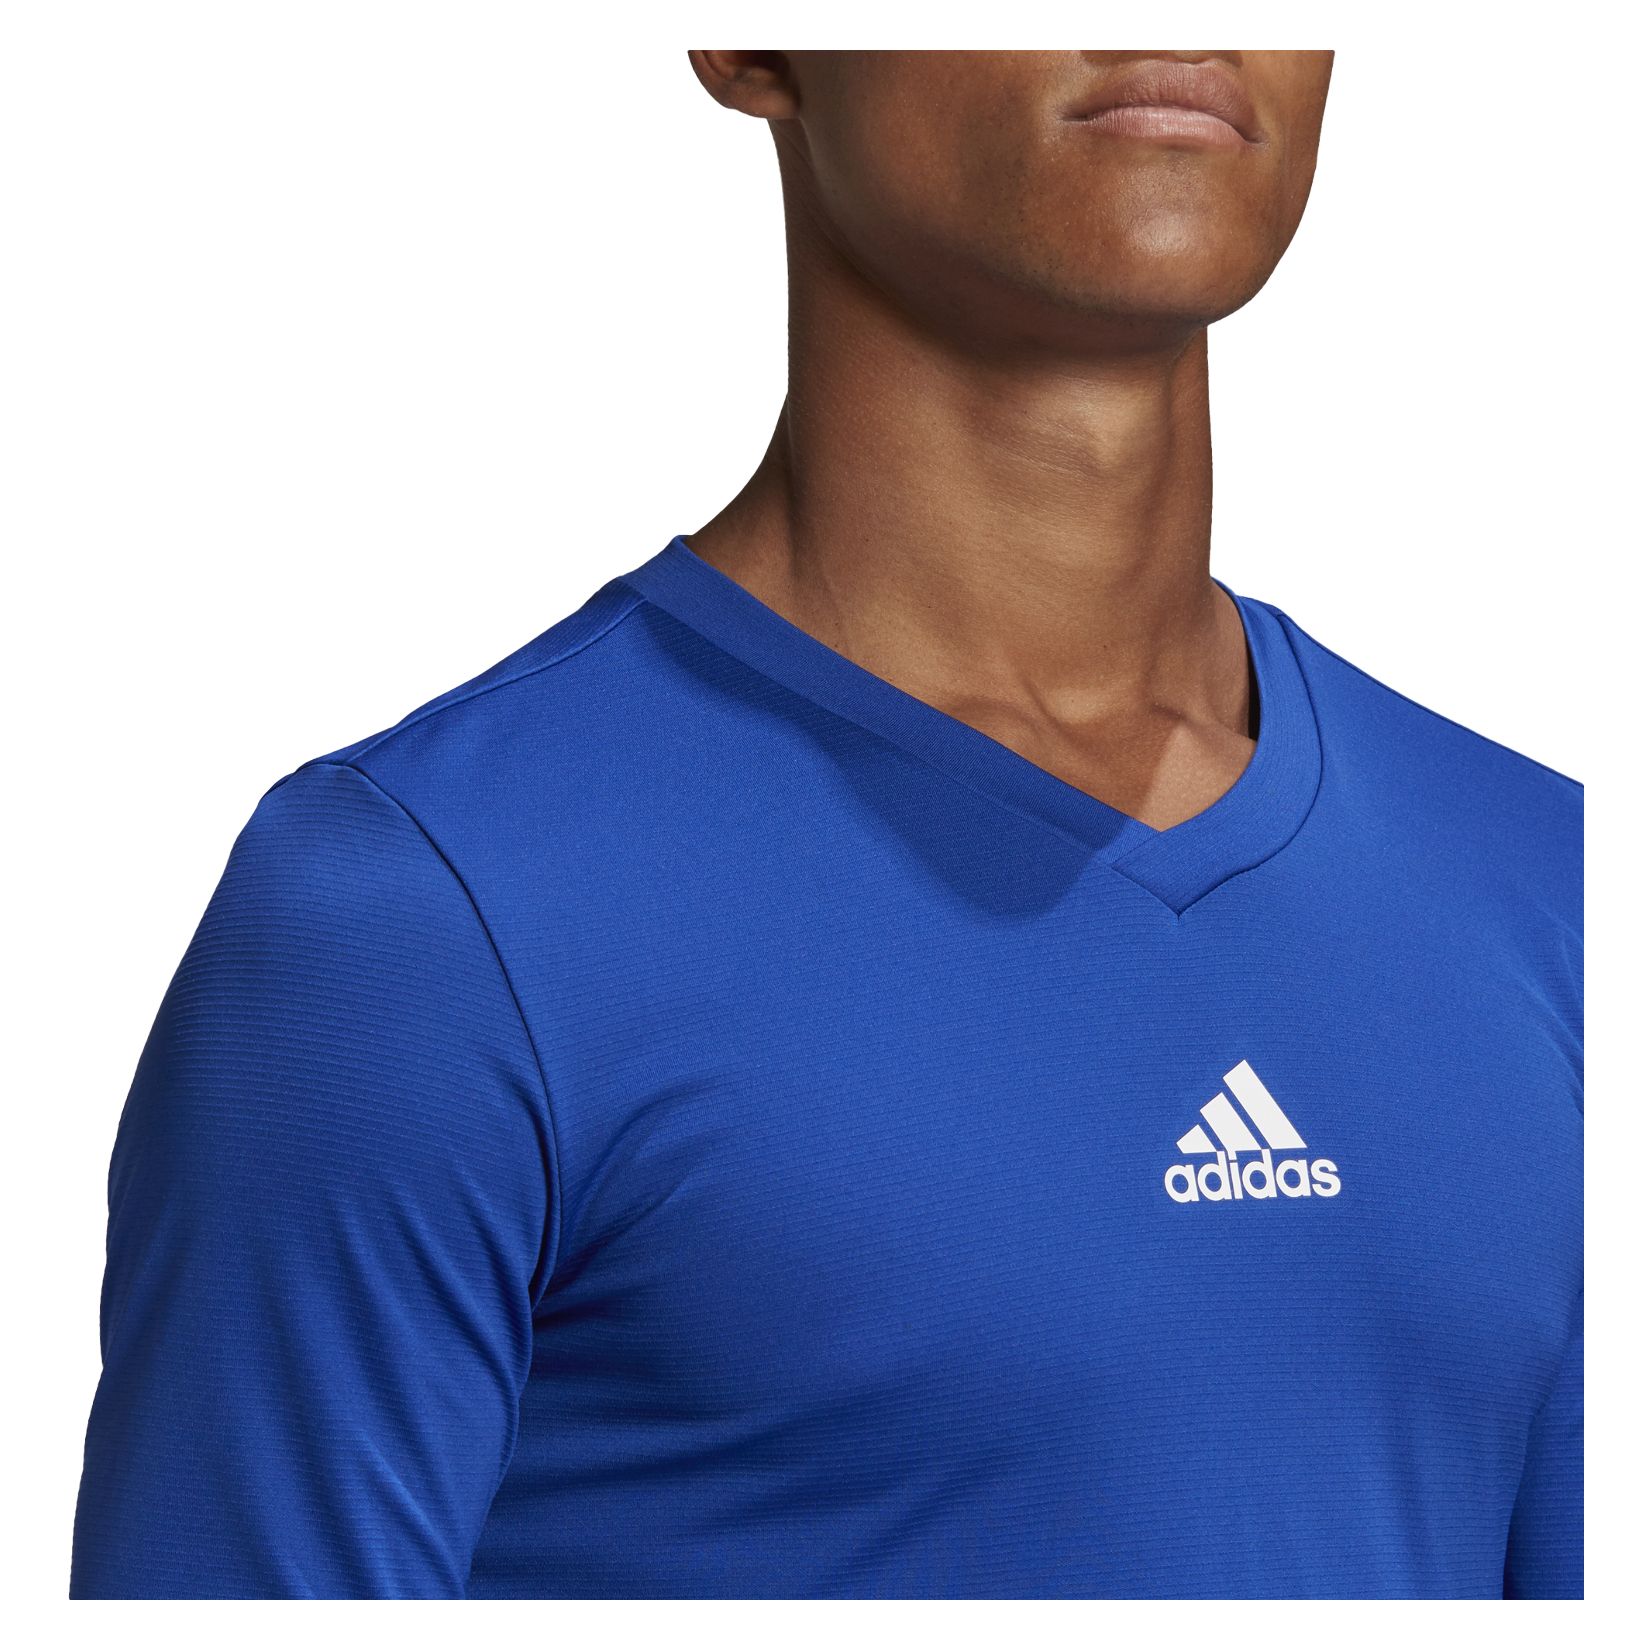 Adidas Long Sleeve Baselayer Tee Team Royal Blue